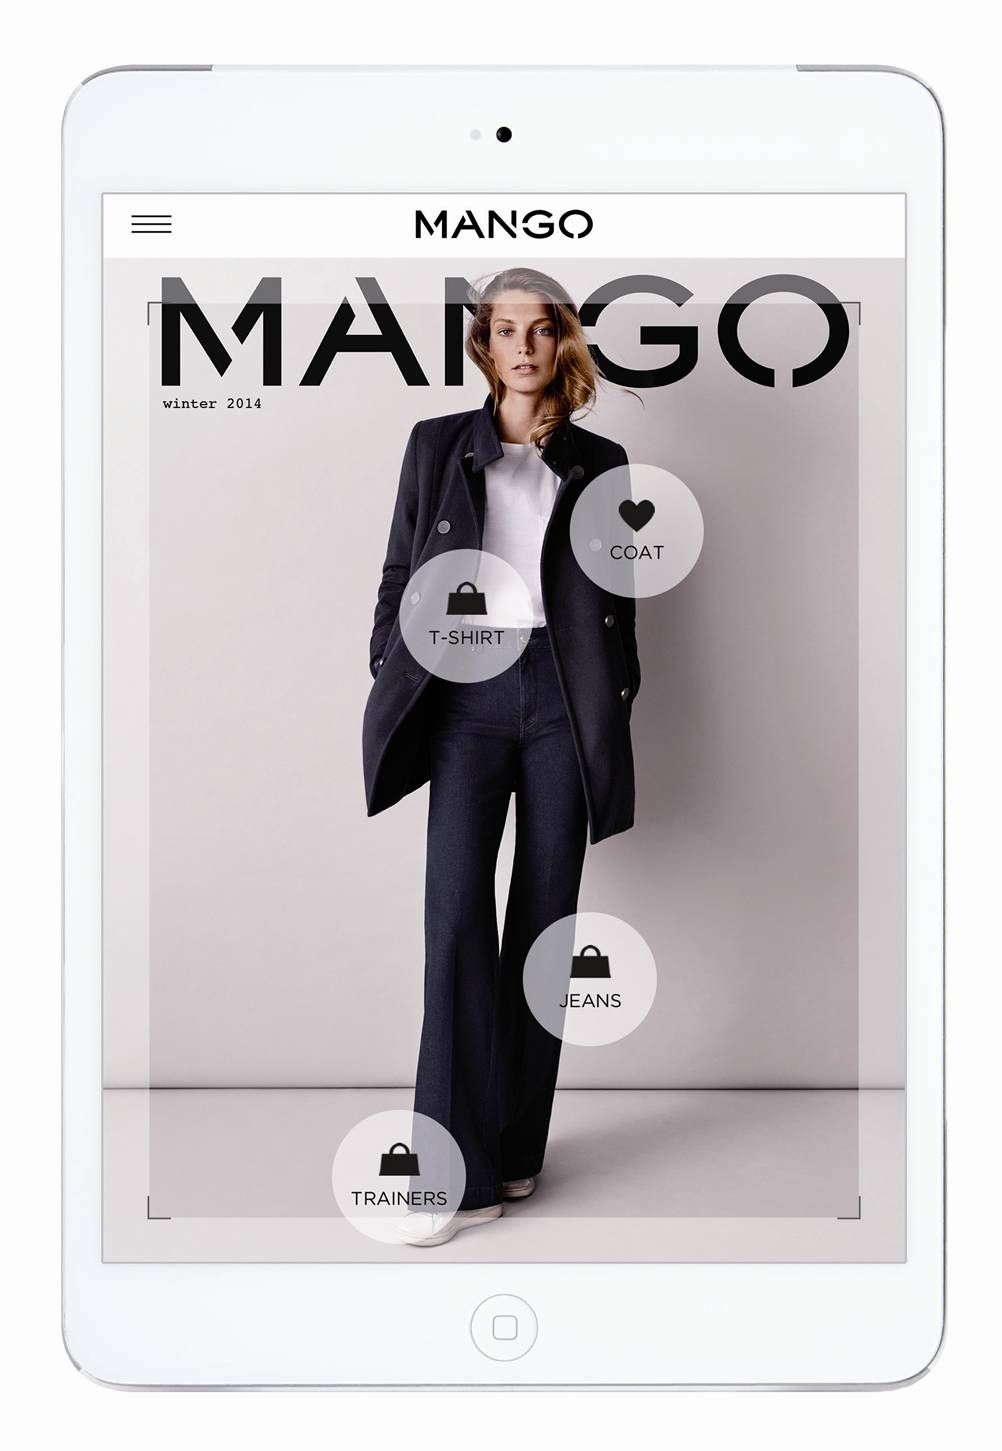 803-App de Mango en m-commerce con escner de cdigos de barras, localizador de prendas, etc